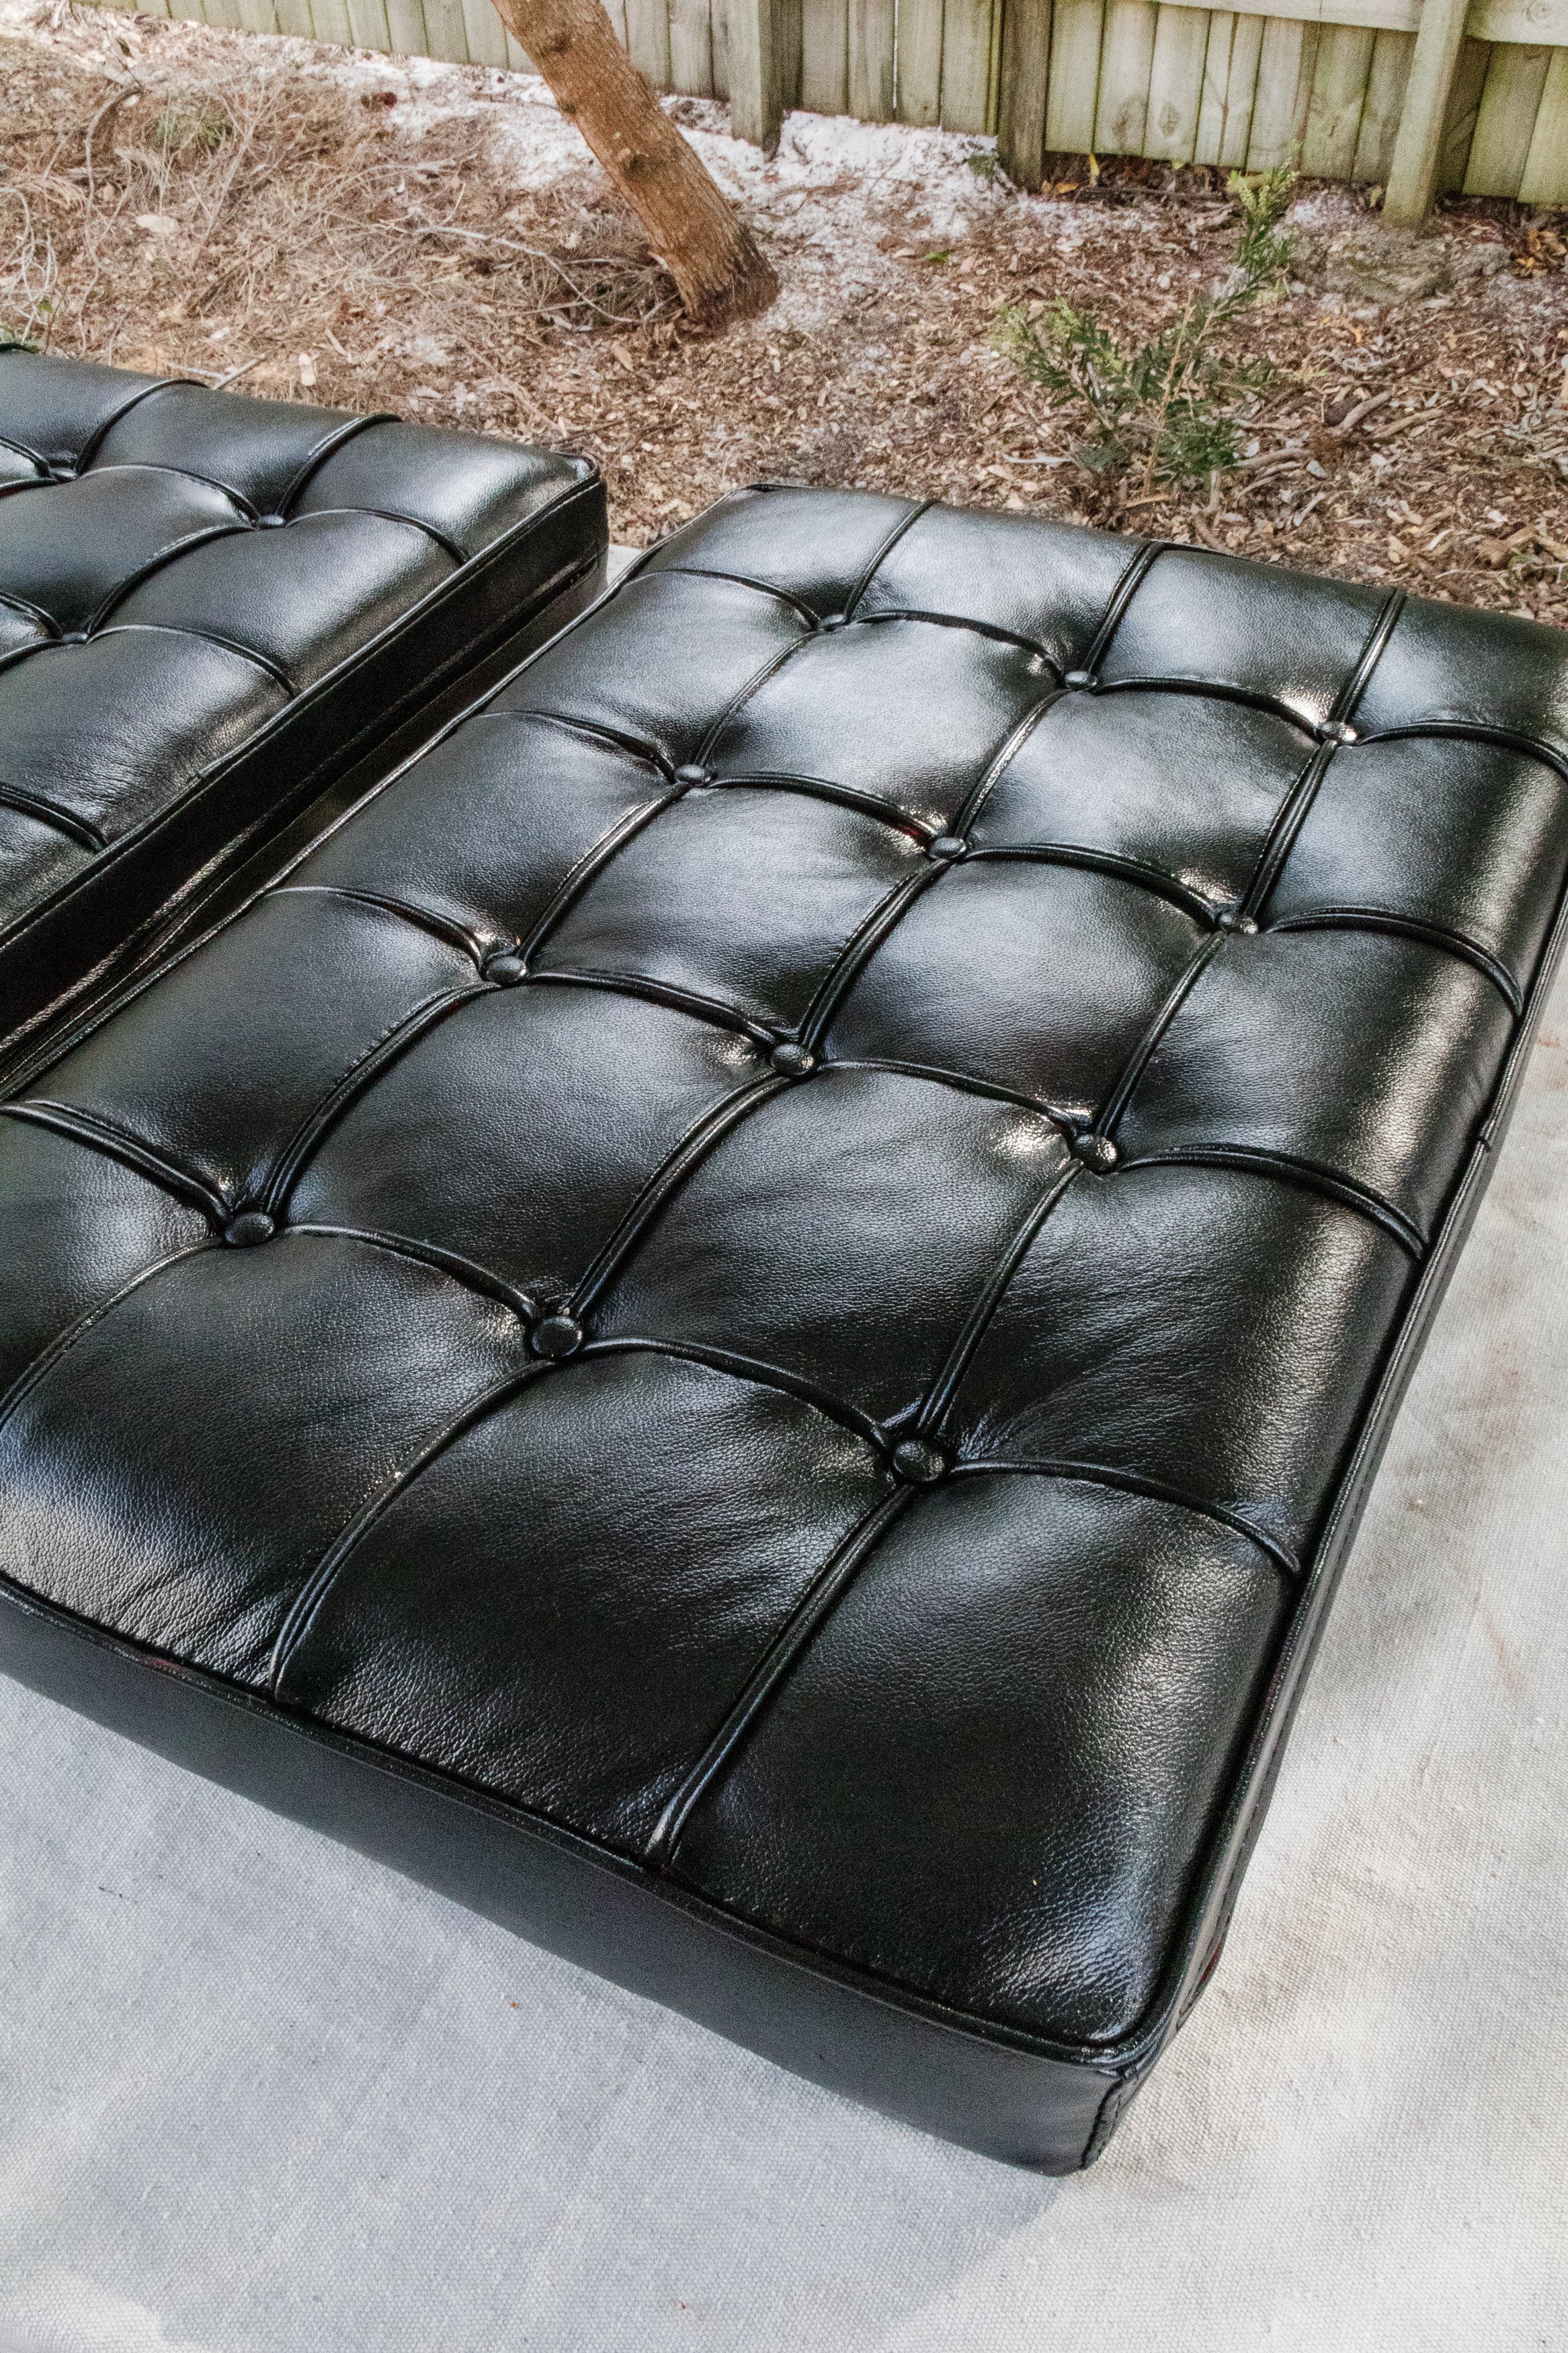 Chrome Leather Chair Restoration (11 of 54).jpg